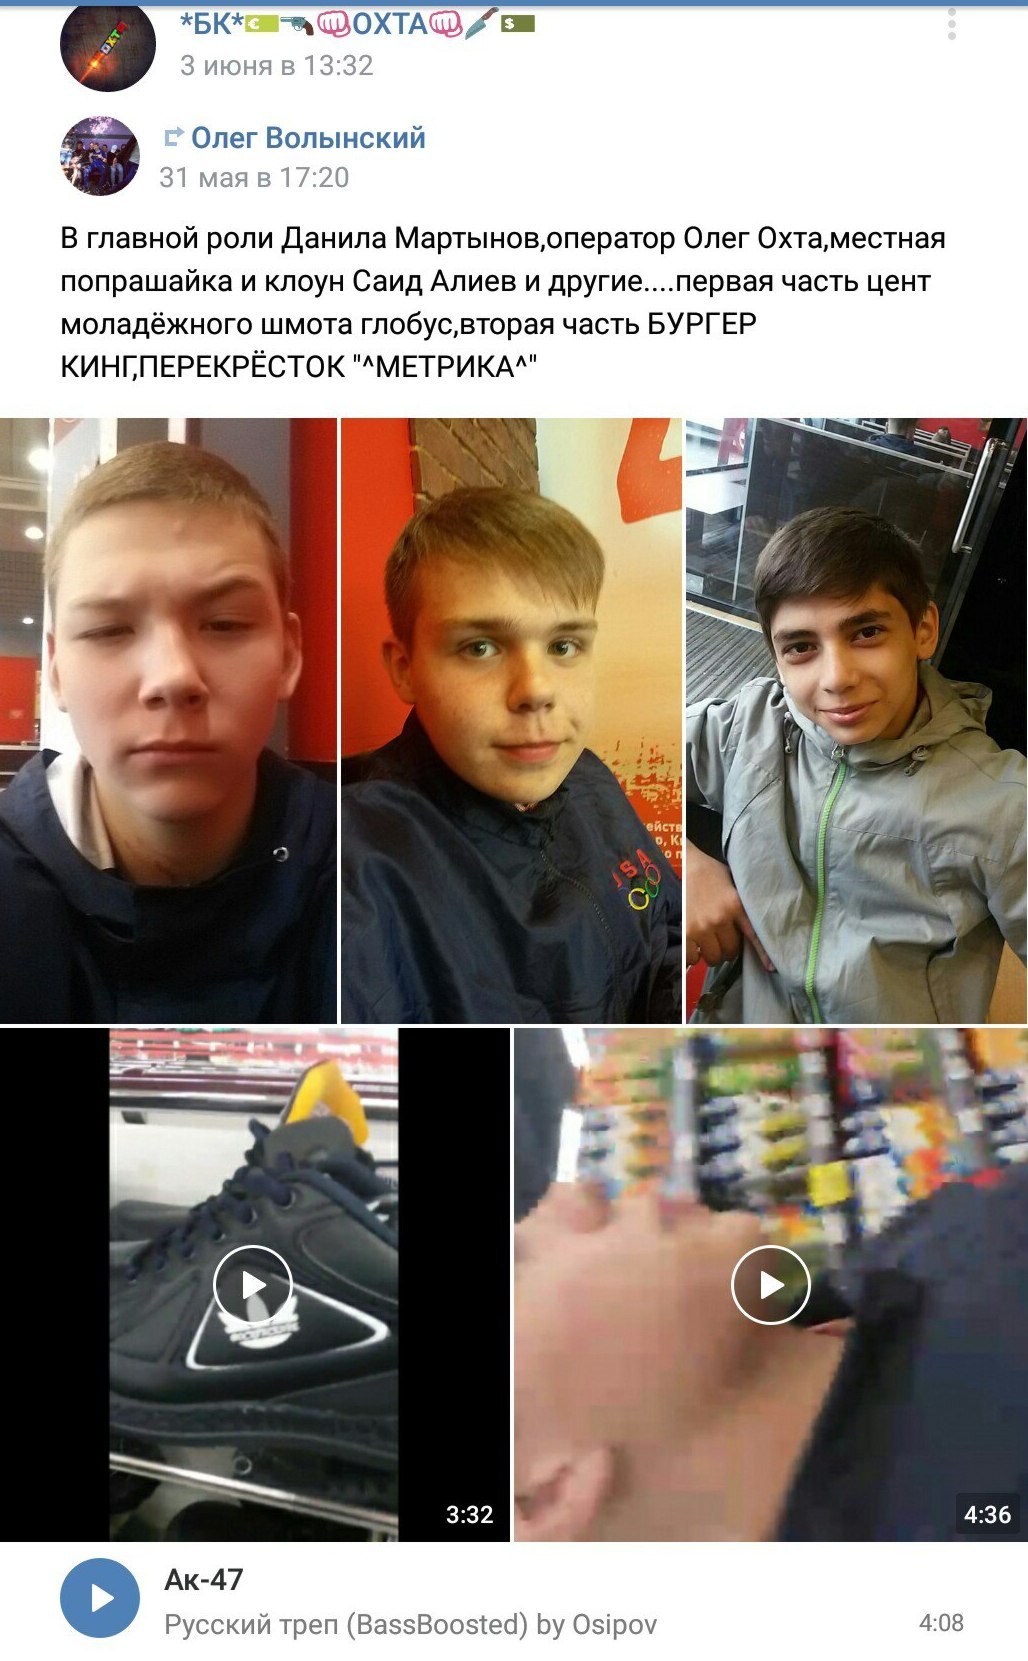 Again a juvenile organized crime group - Youngsters, Crime, Saint Petersburg, Longpost